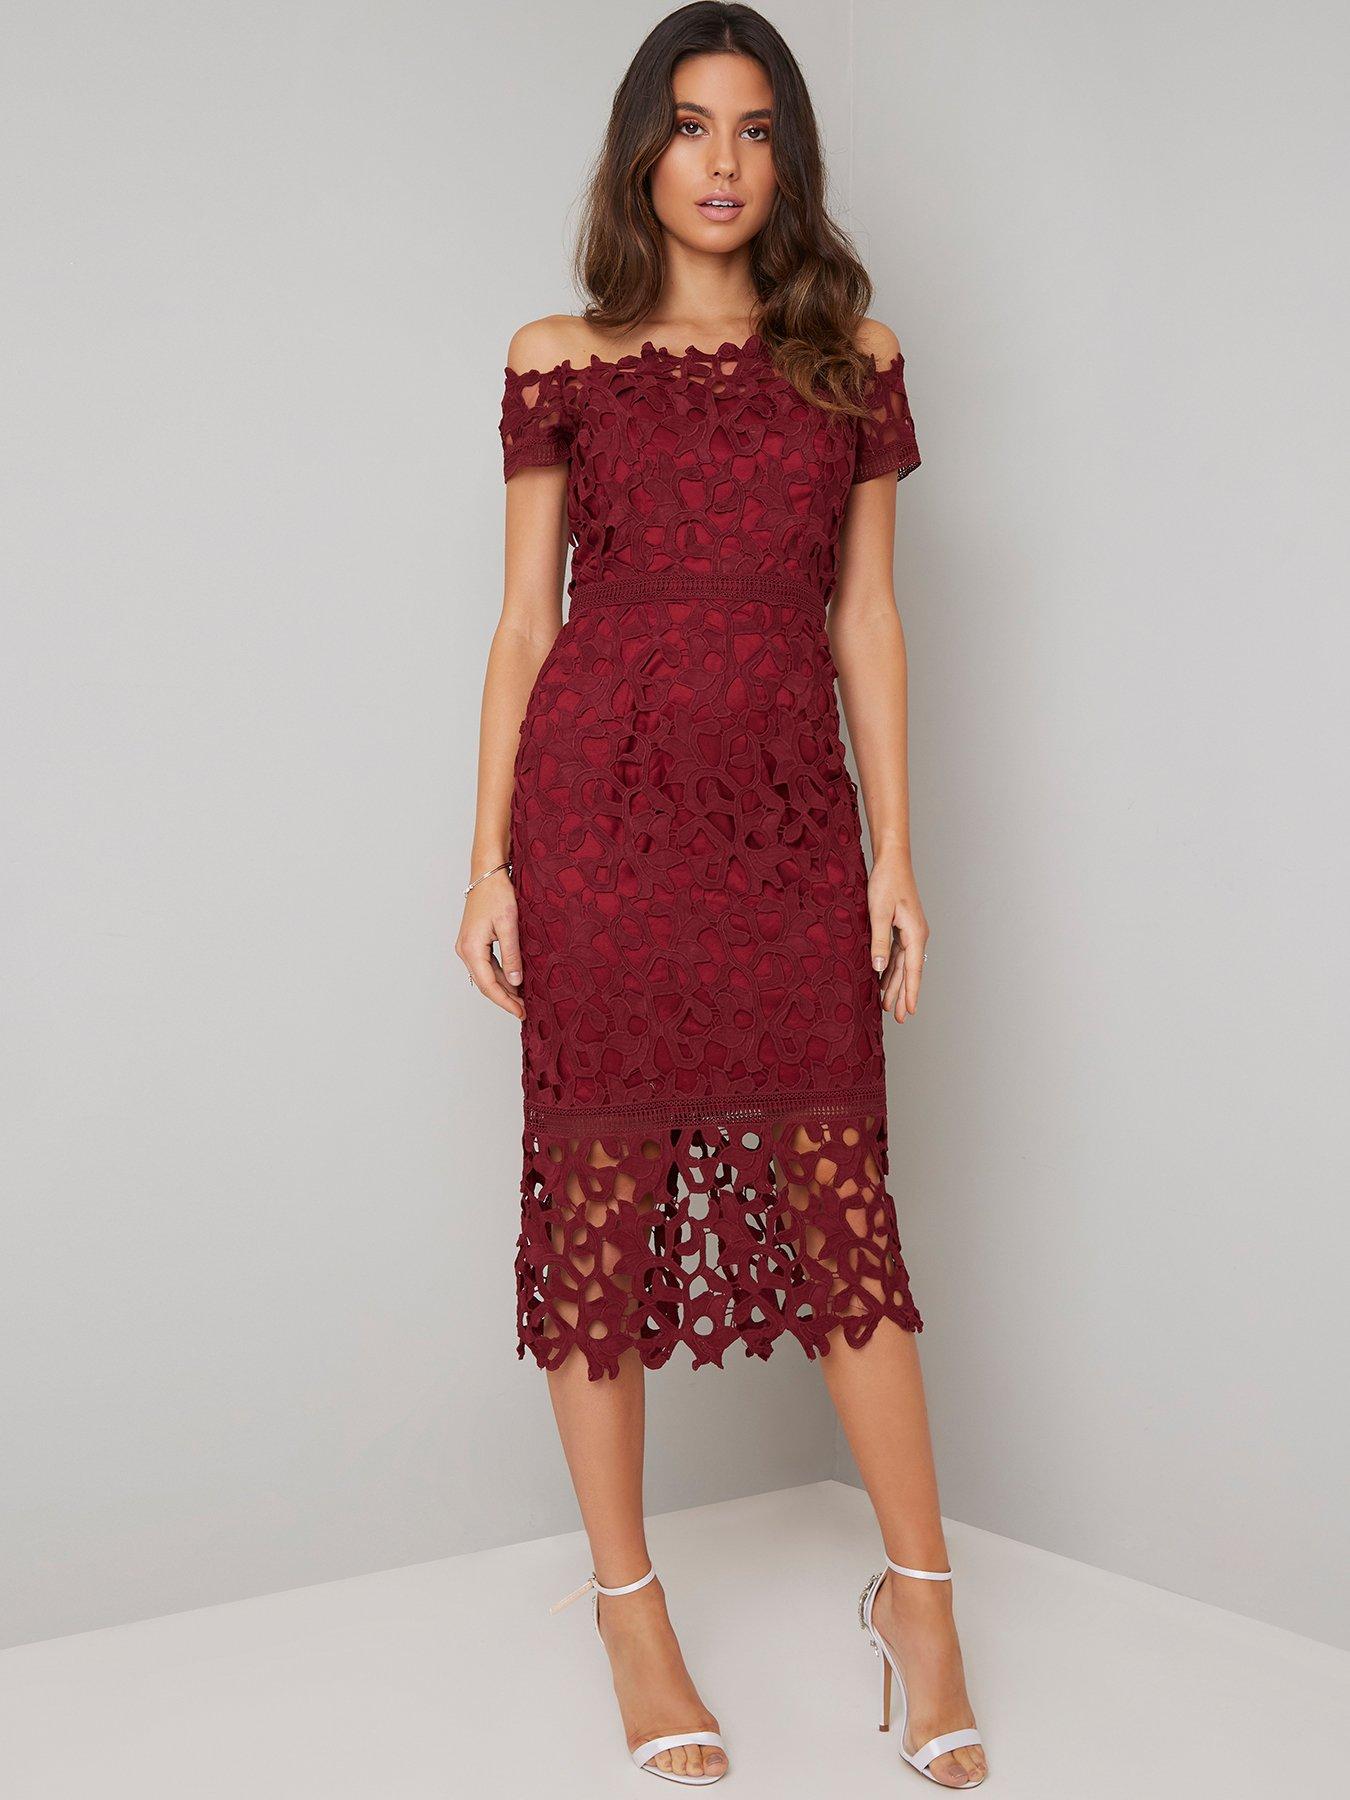 burgundy lace dress uk